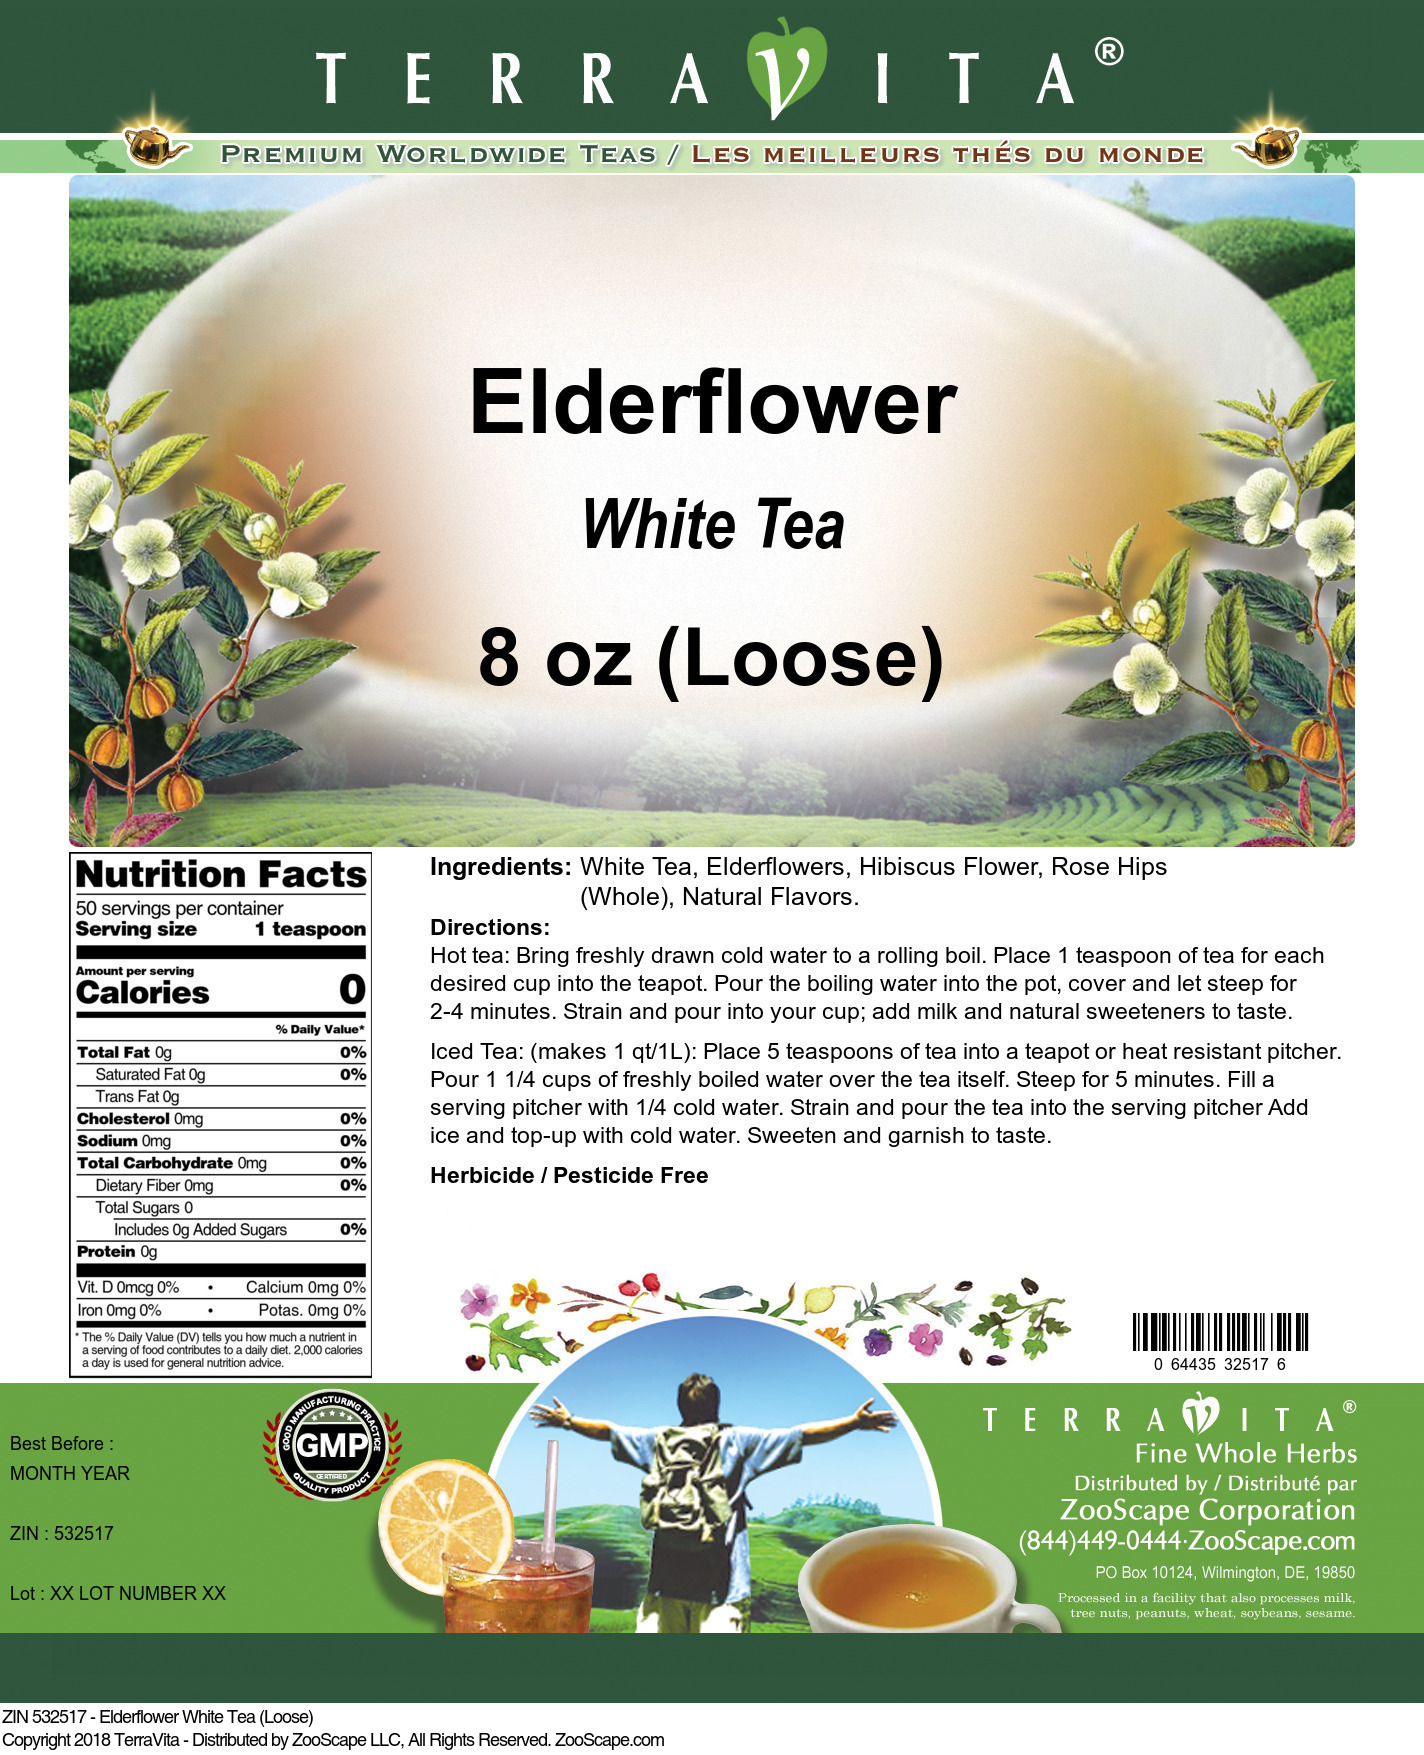 Elderflower White Tea (Loose) - Label